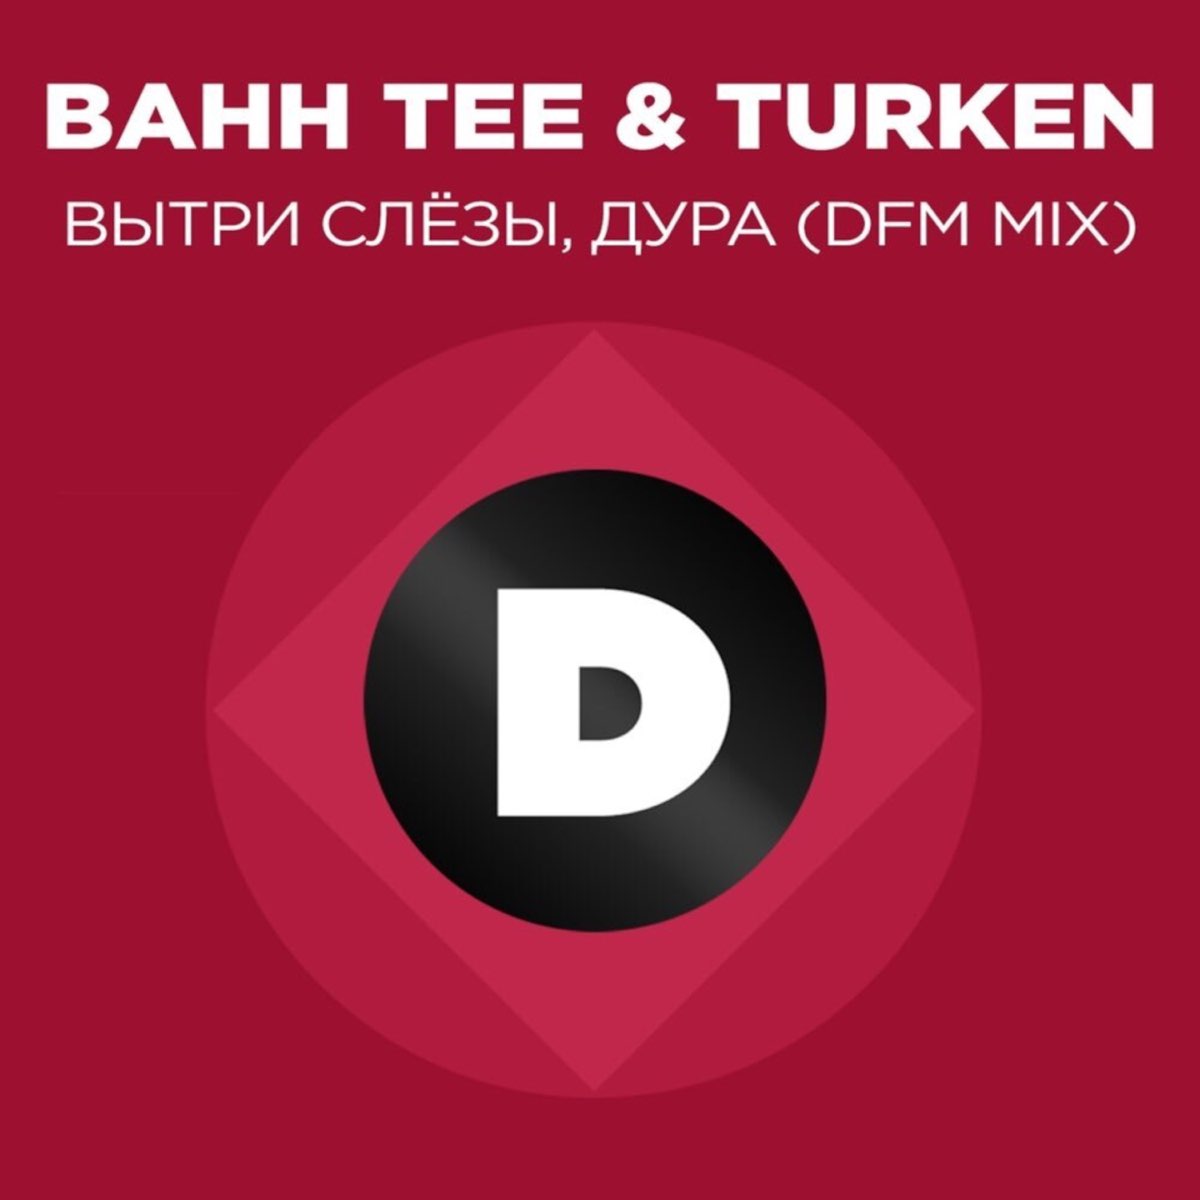 Дура mp3. DFM Mix. Bahh Tee feat. Turken вытри слезы. Bahh Tee, Turken - вытри слезы, дура.mp3. DFM слушать.